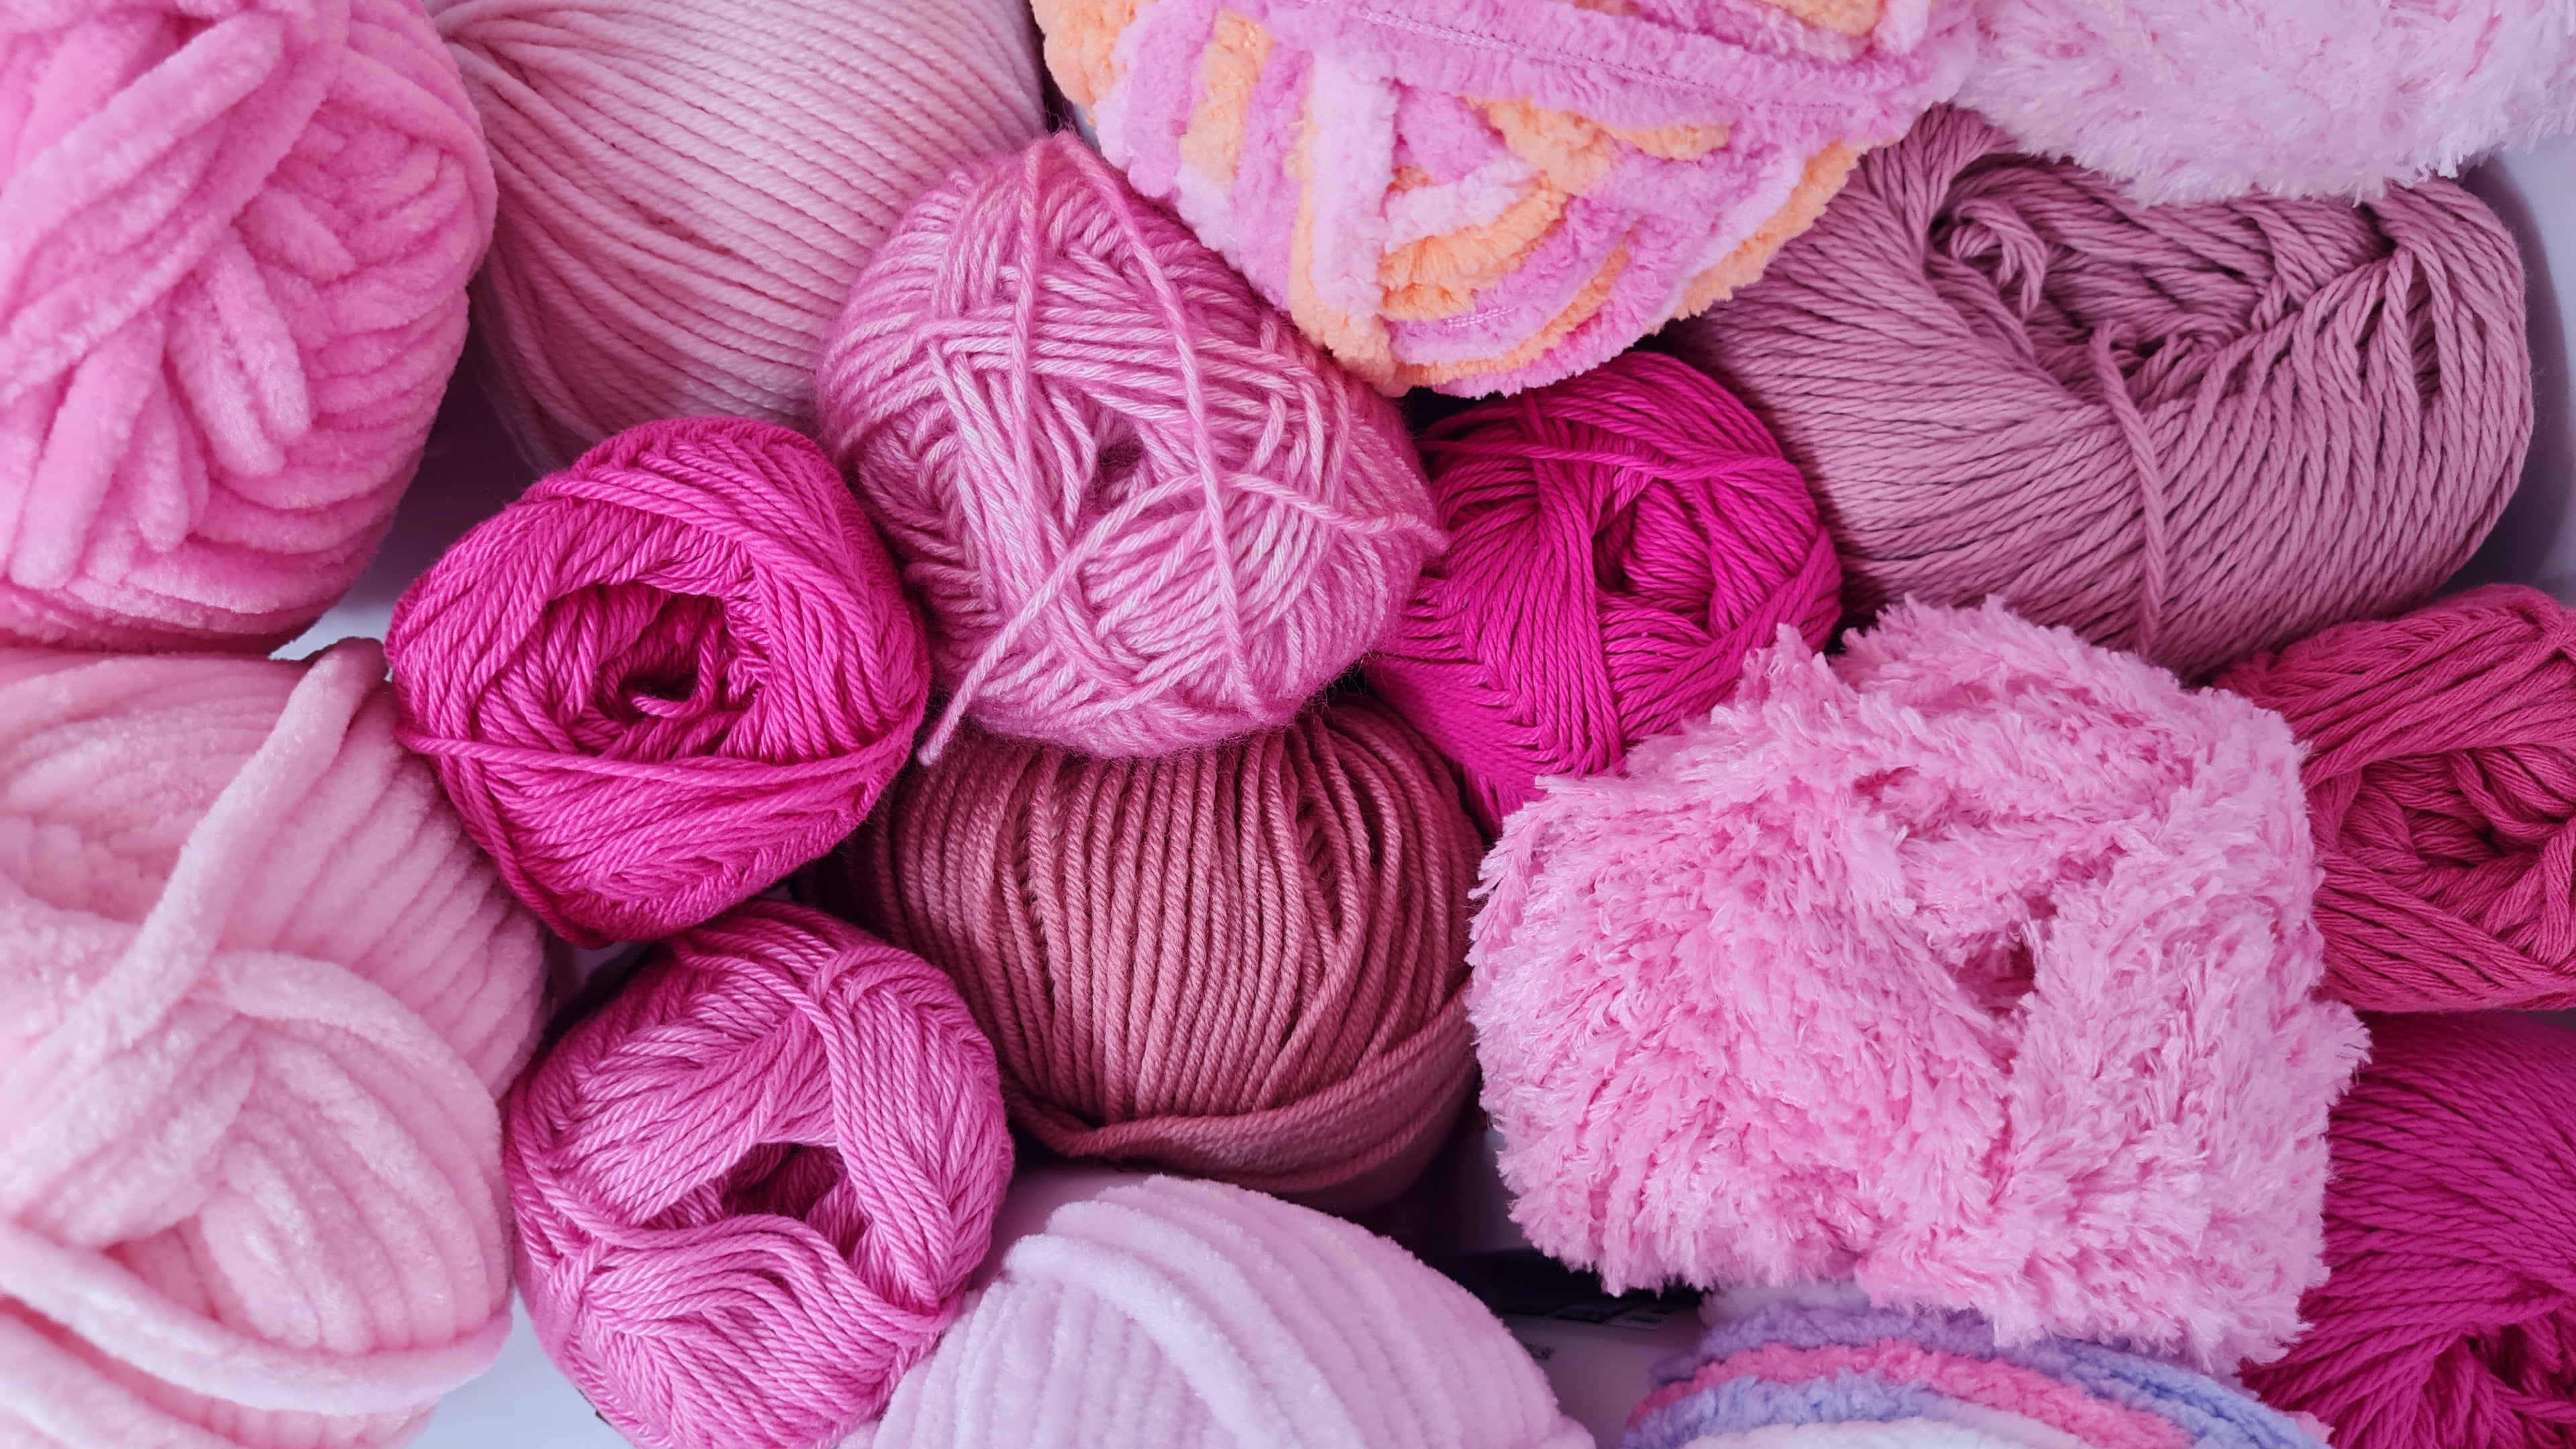 Pink yarns from Premier chenille , Bernat, Broadway merino dk, Scheepjes Catona, Stonewashed, Lily sugar and cream